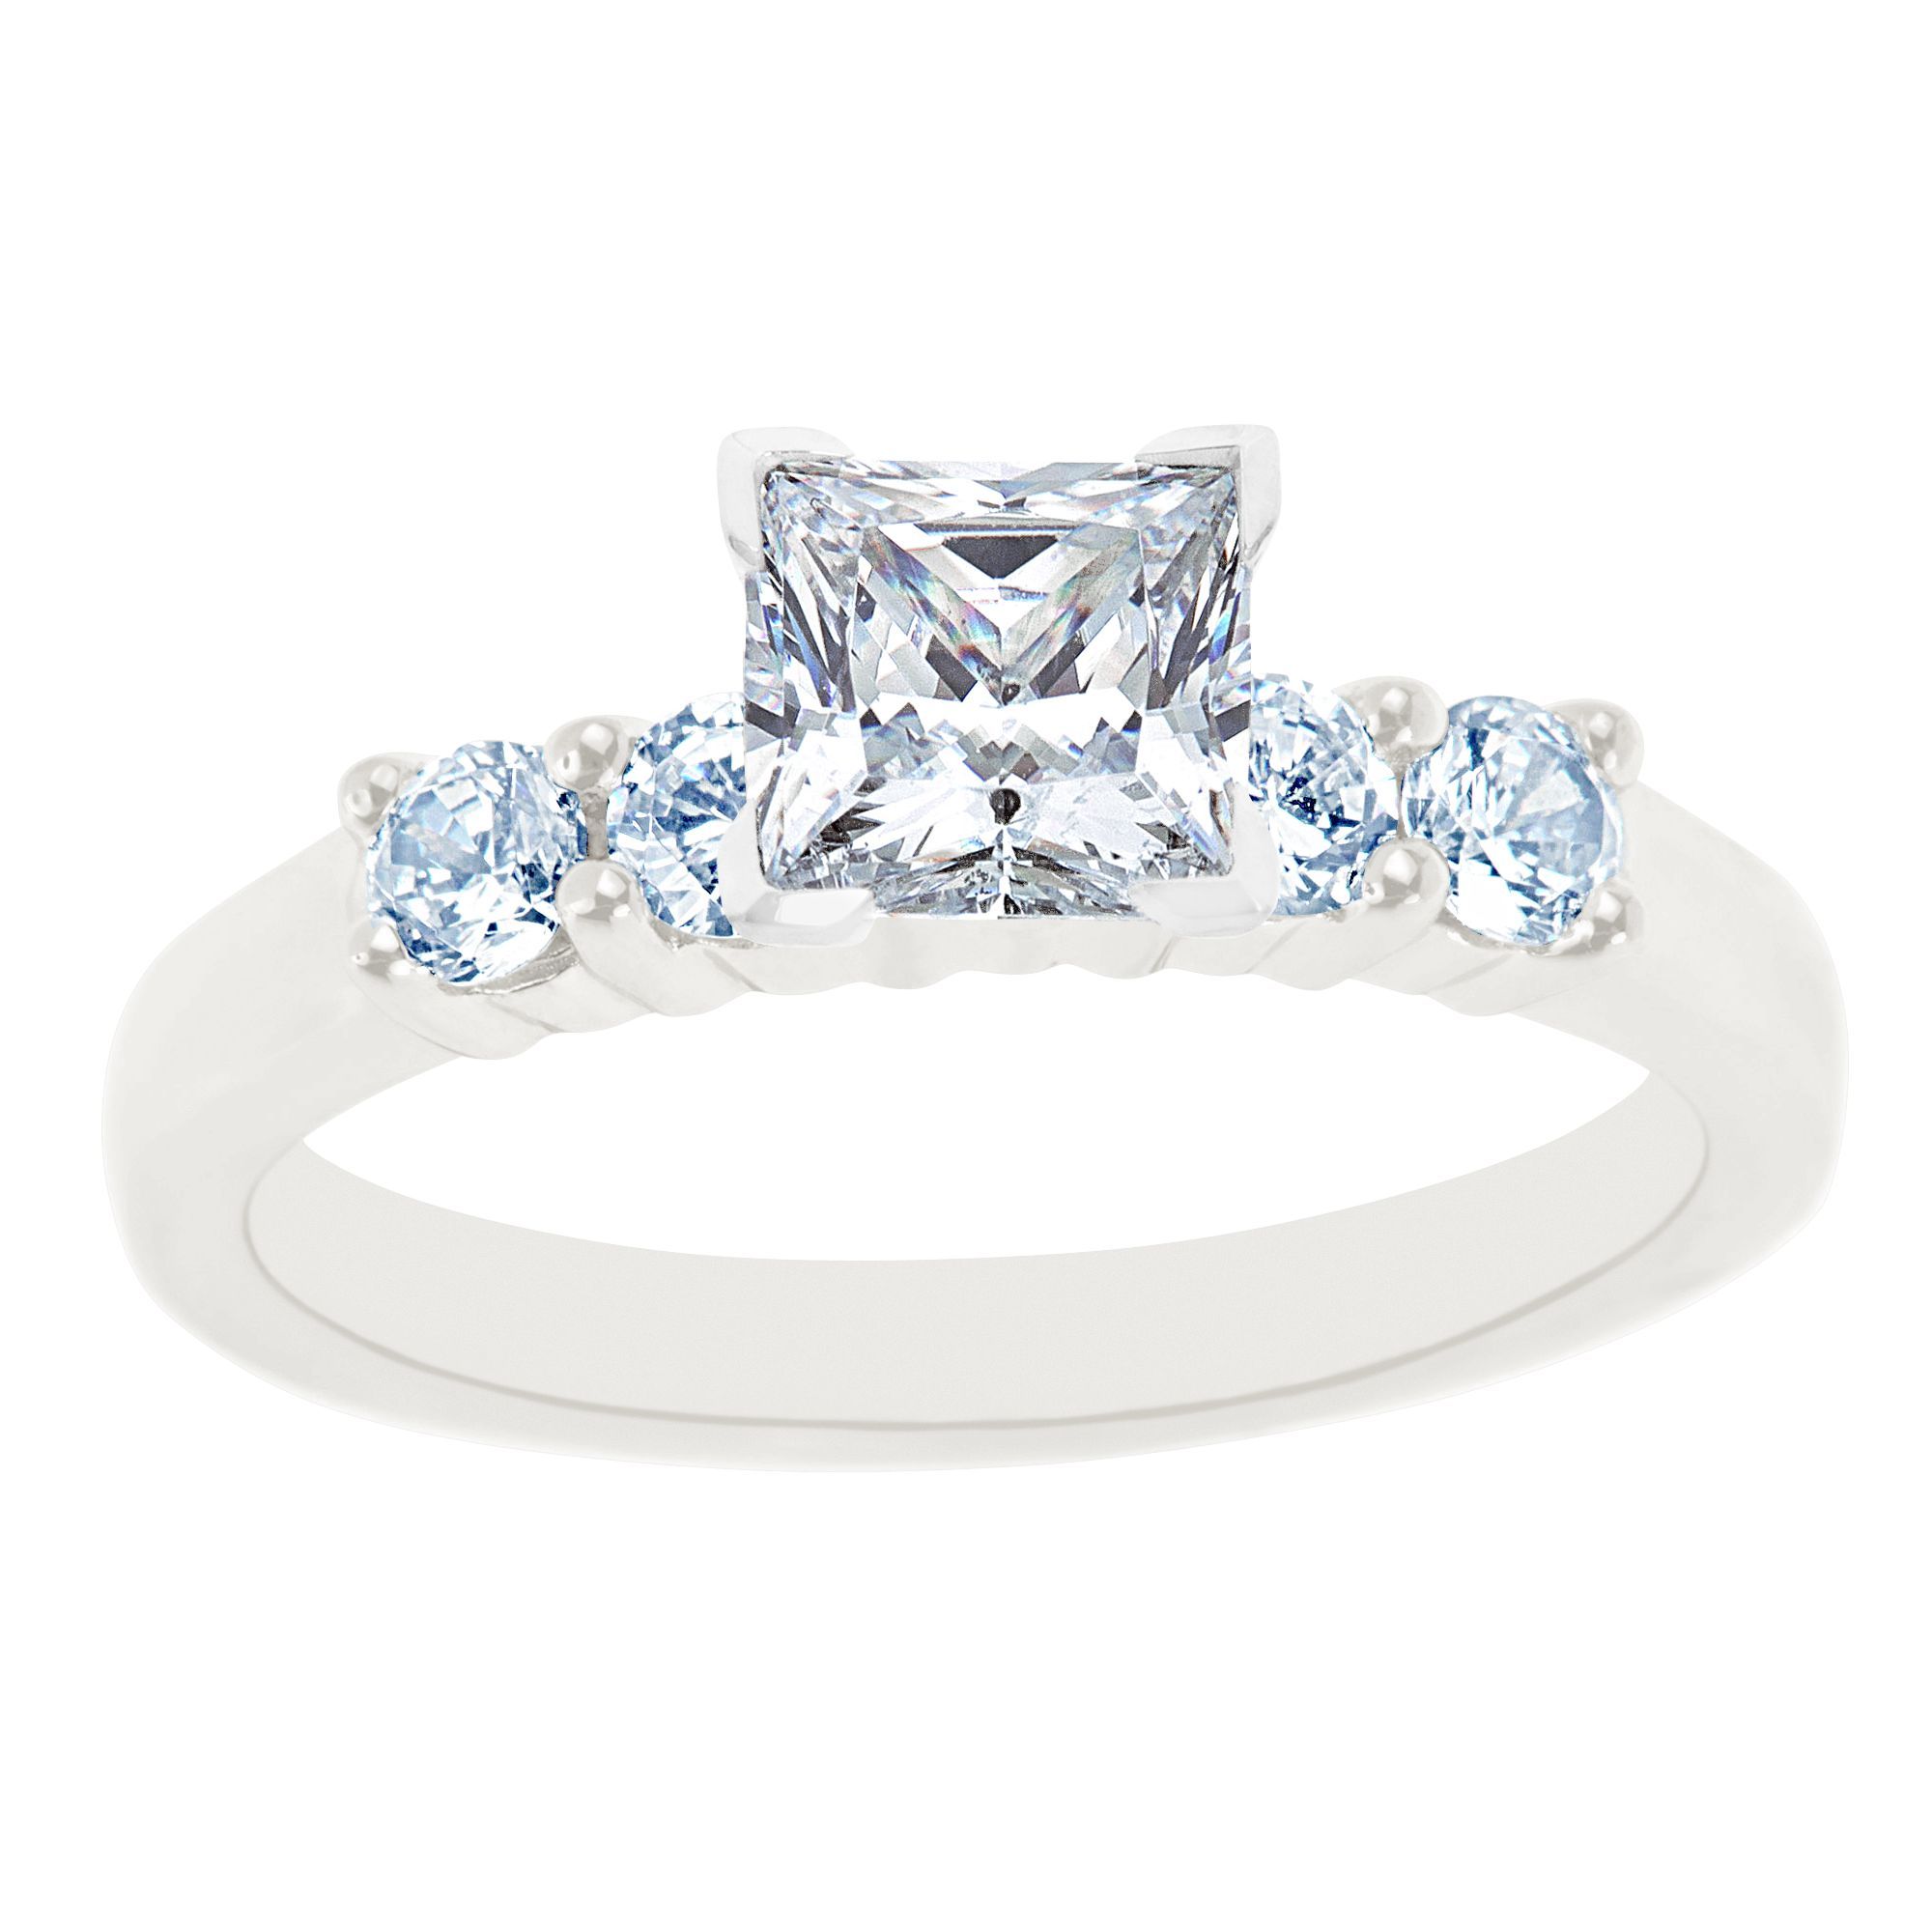 New York City Diamond District 14K White Gold Five Stone Princess Cut Certified Diamond Engagement Ring